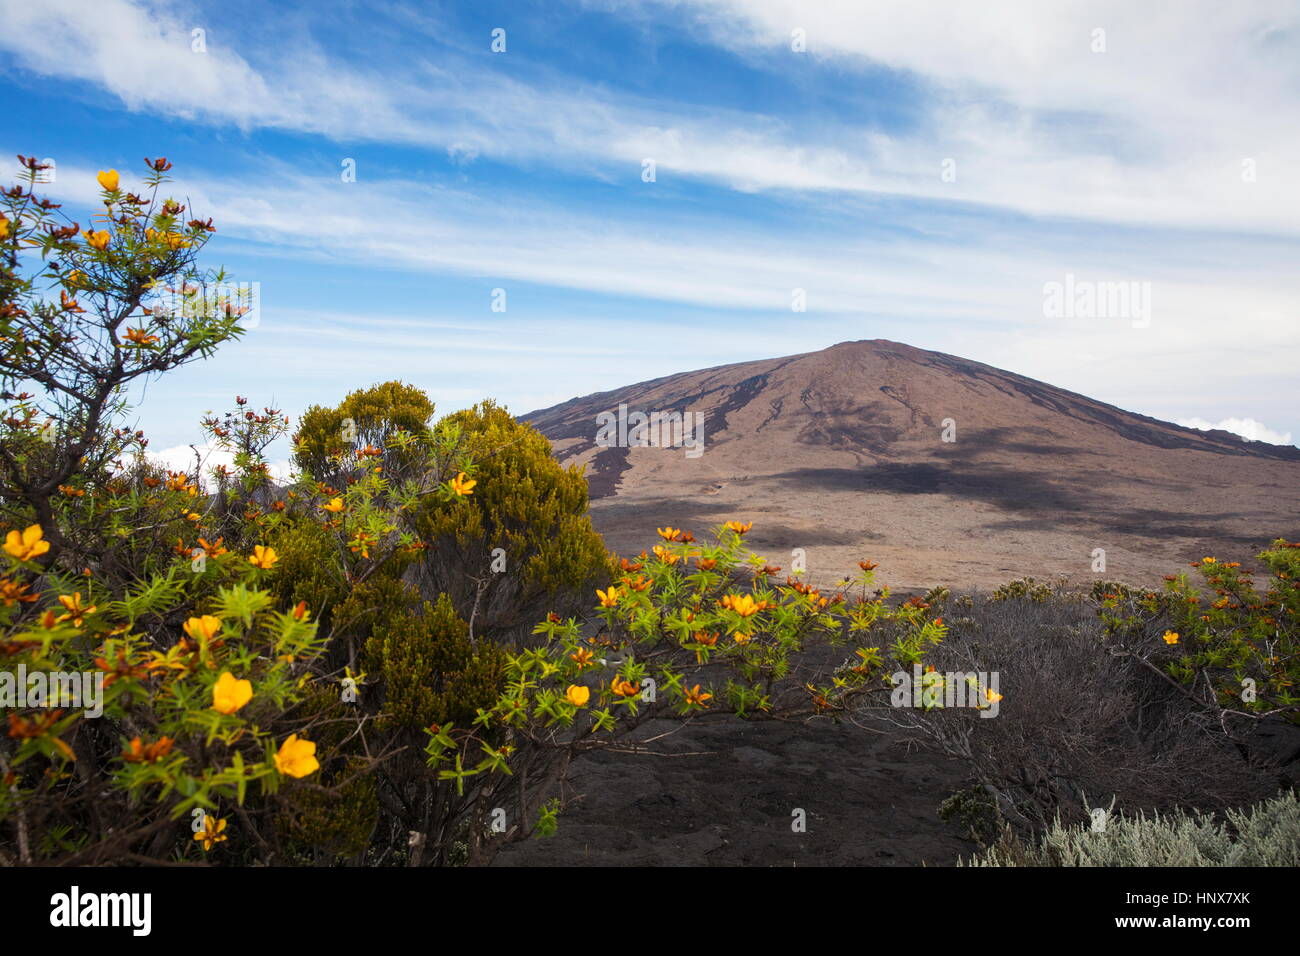 Volcanic landscape with yellow shrub flowers and Piton de la Fournaise, Reunion Island Stock Photo